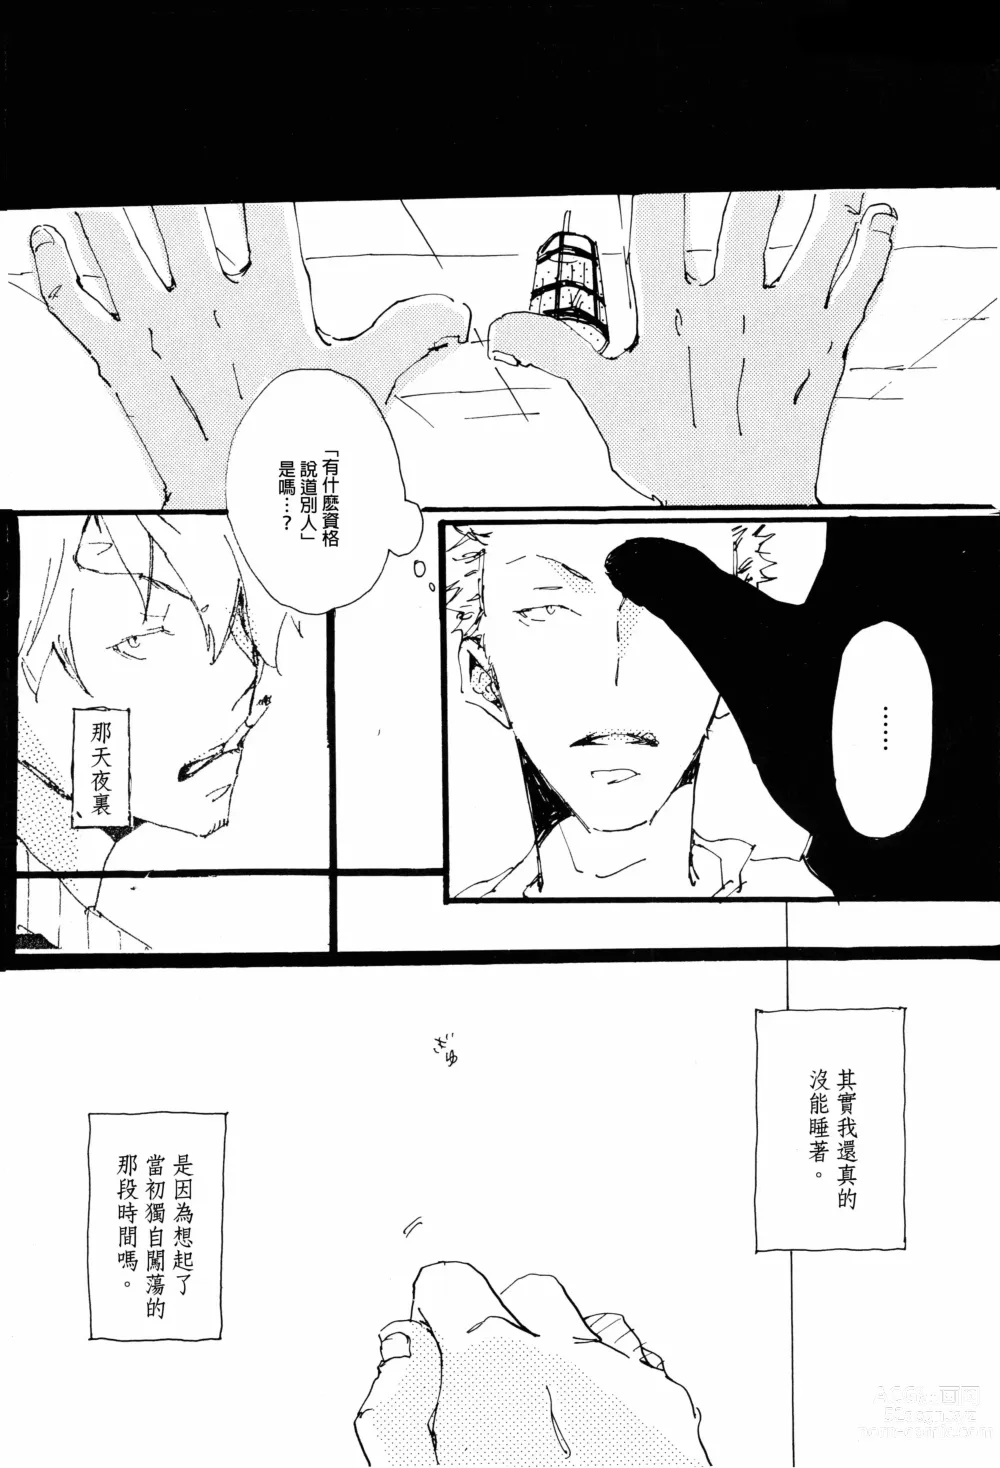 Page 13 of doujinshi 掌中缺失的纽扣